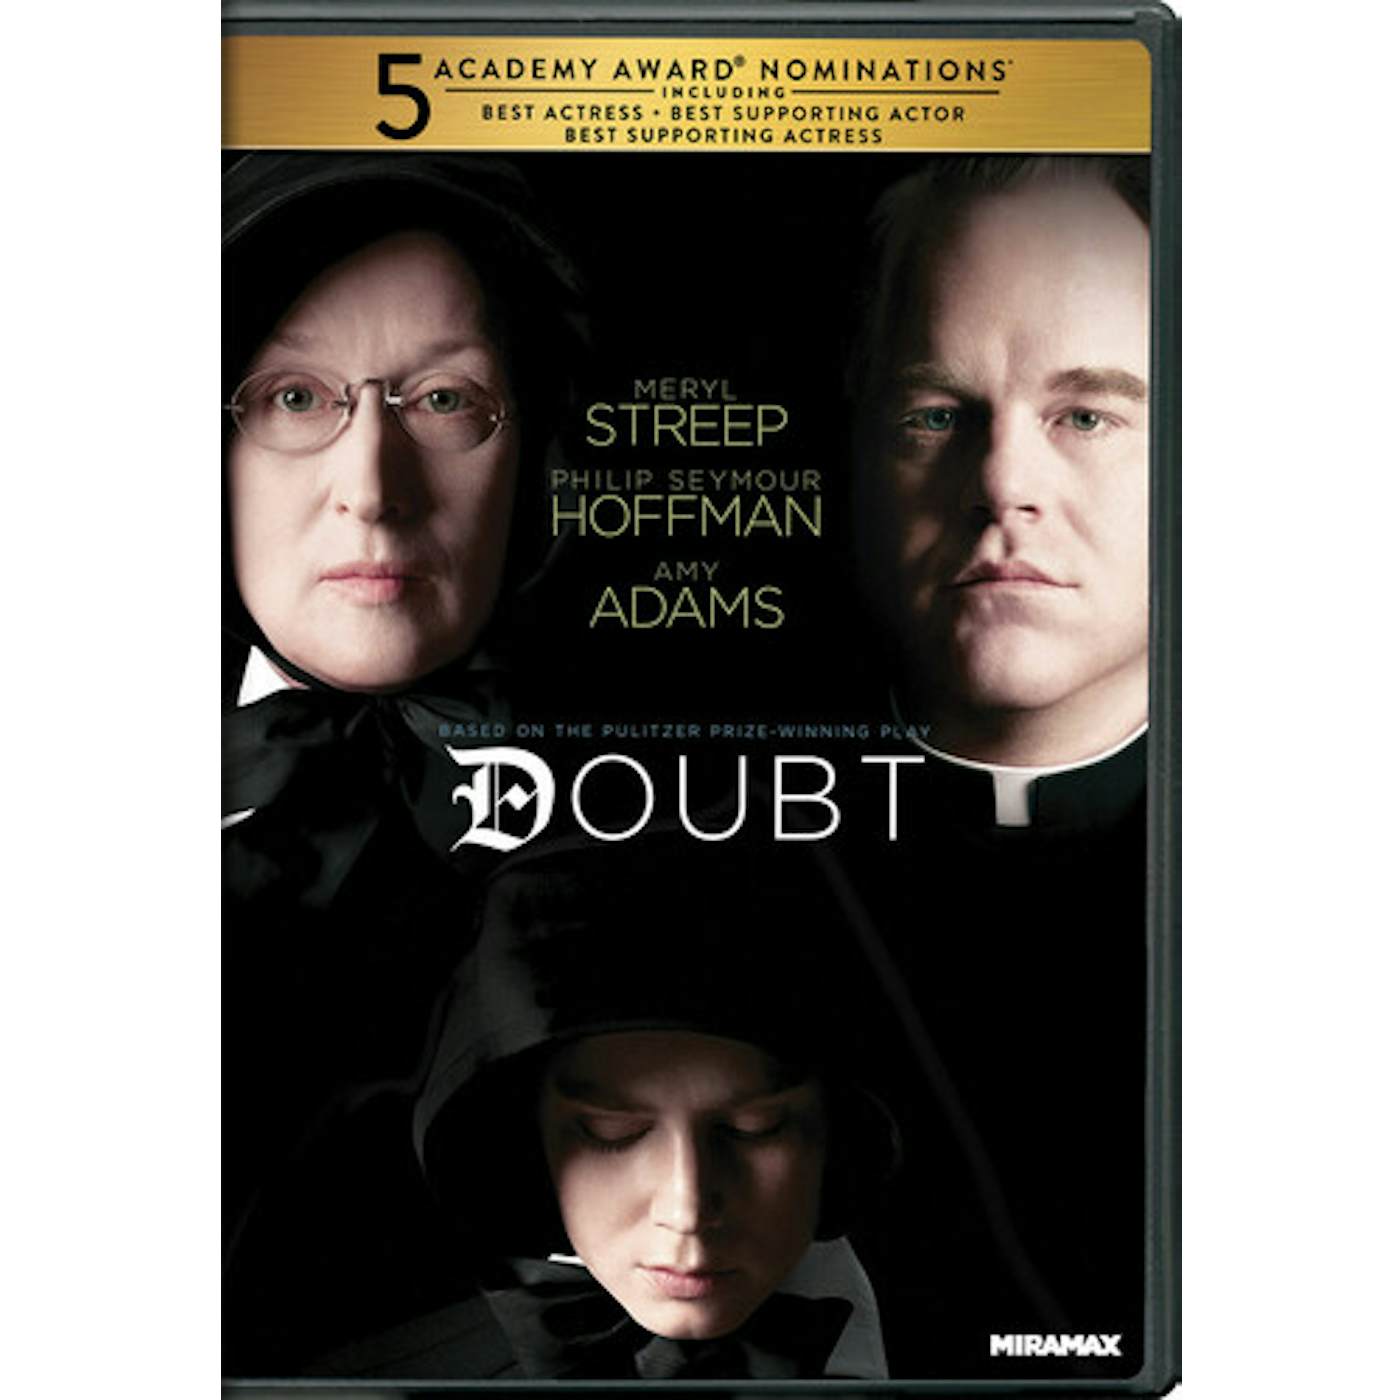 DOUBT DVD